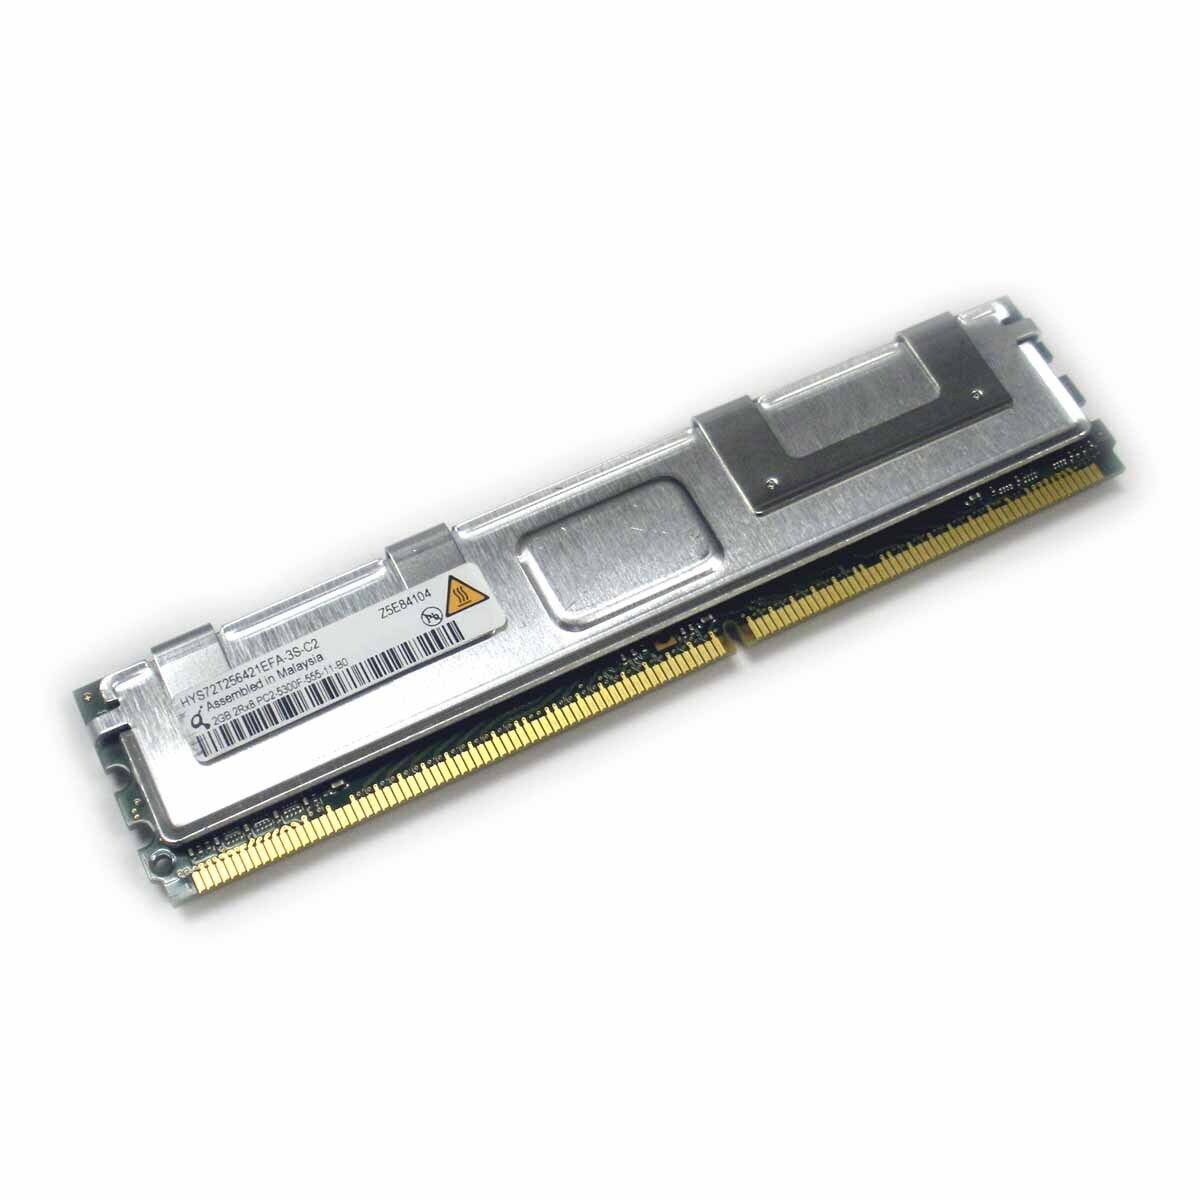 Sun 371-2655 Memory 2GB PC2-5300 DDR2-667MHz